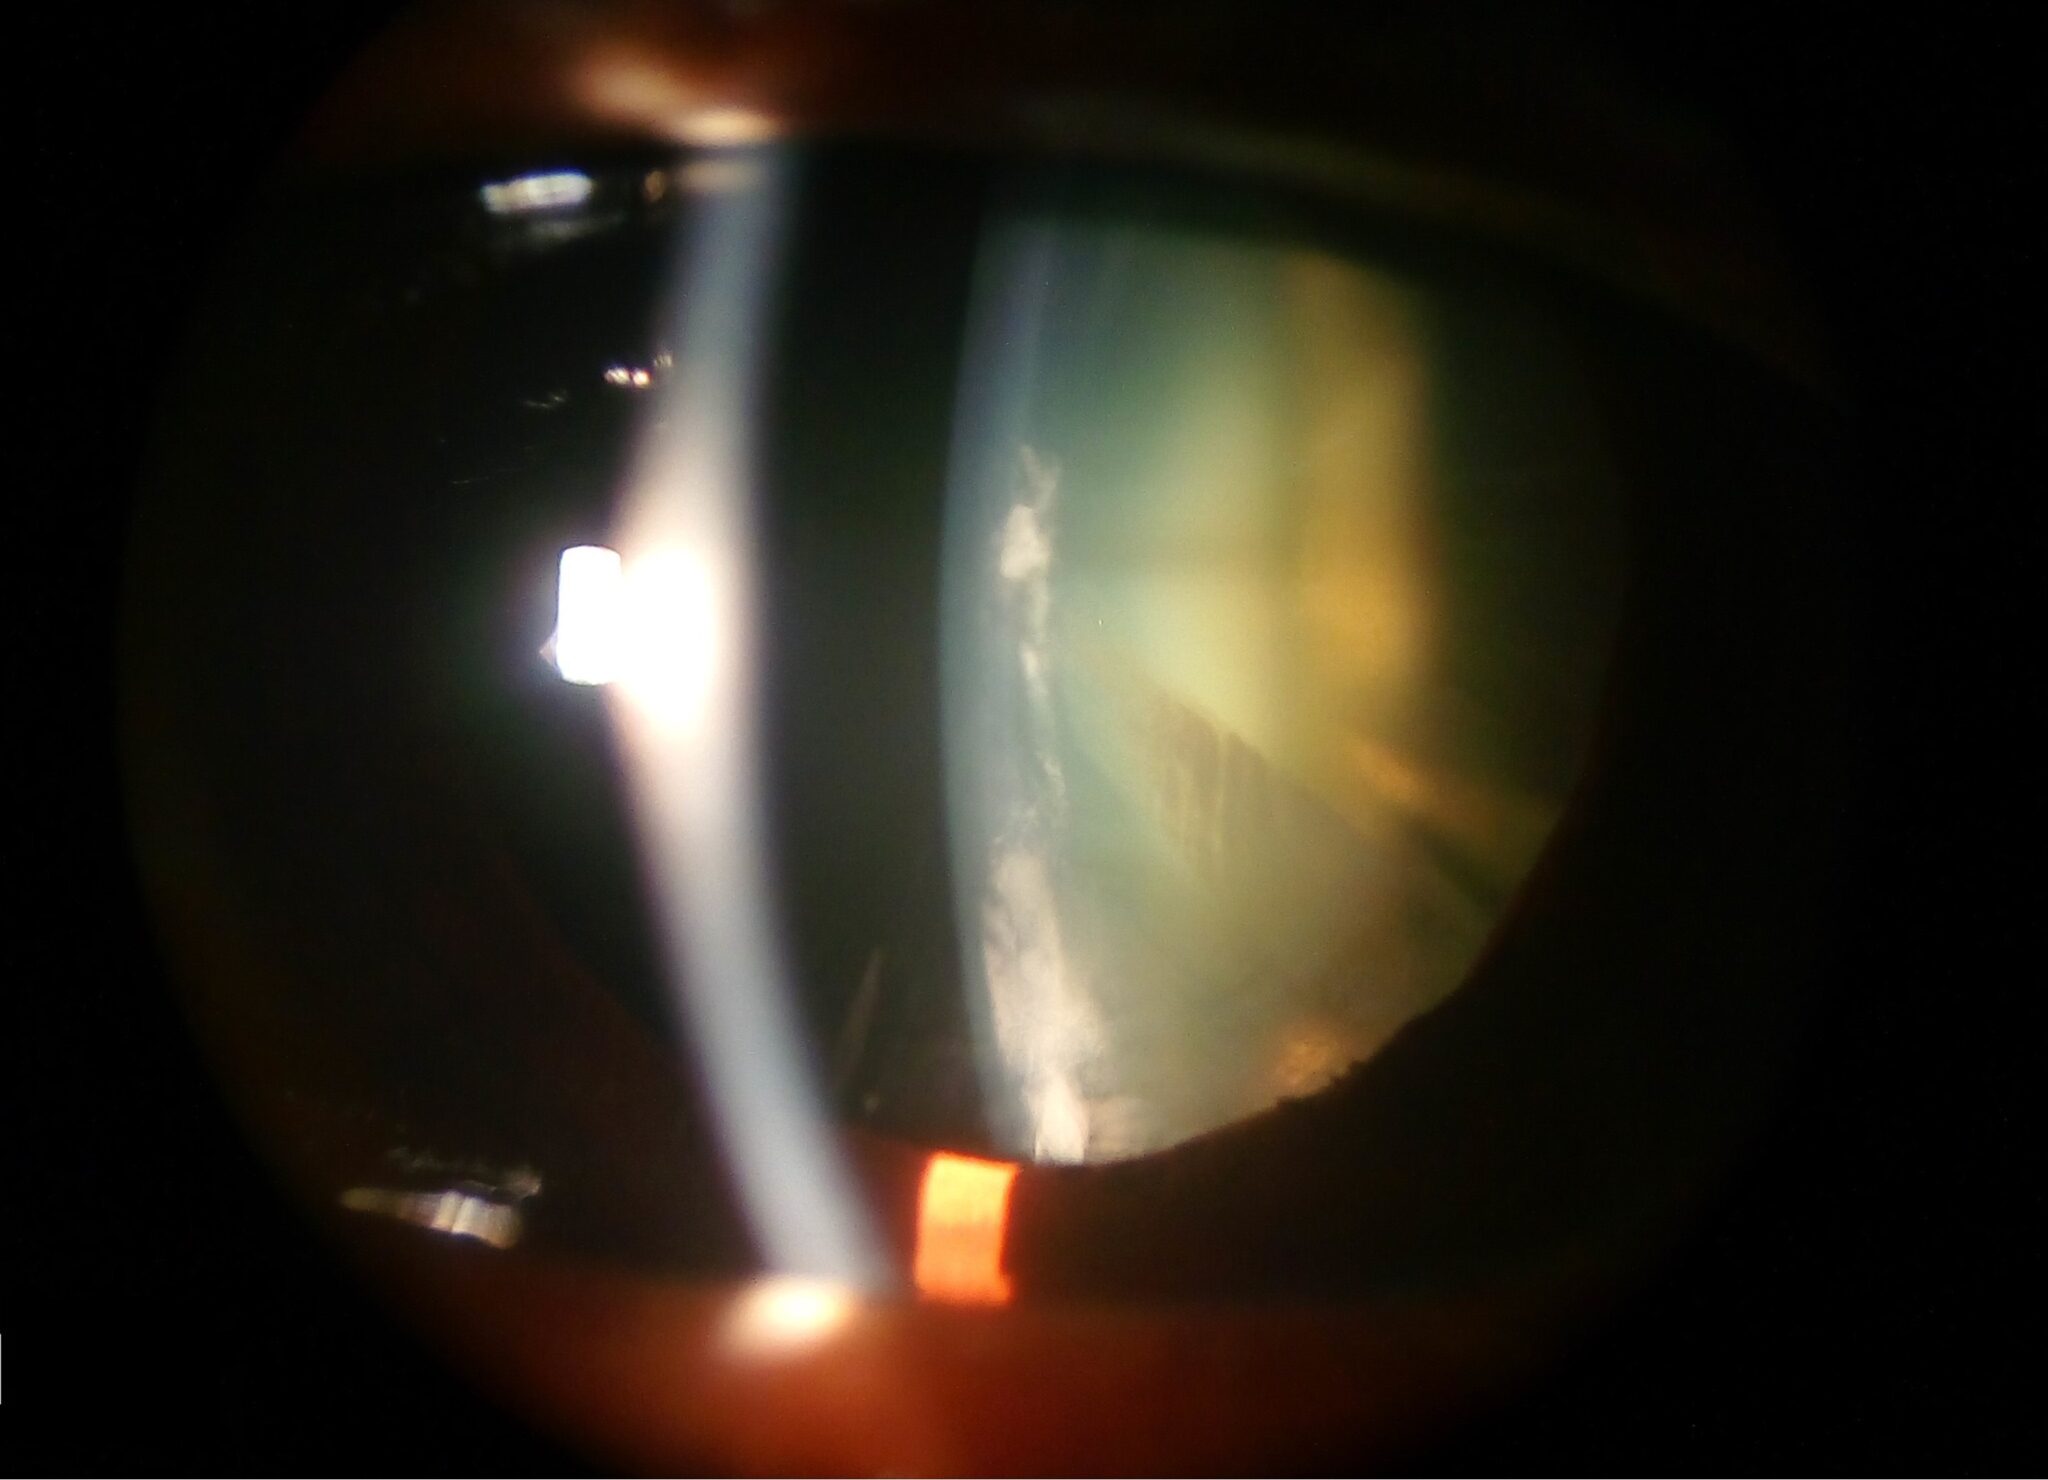 Slit lamp section through a cataract